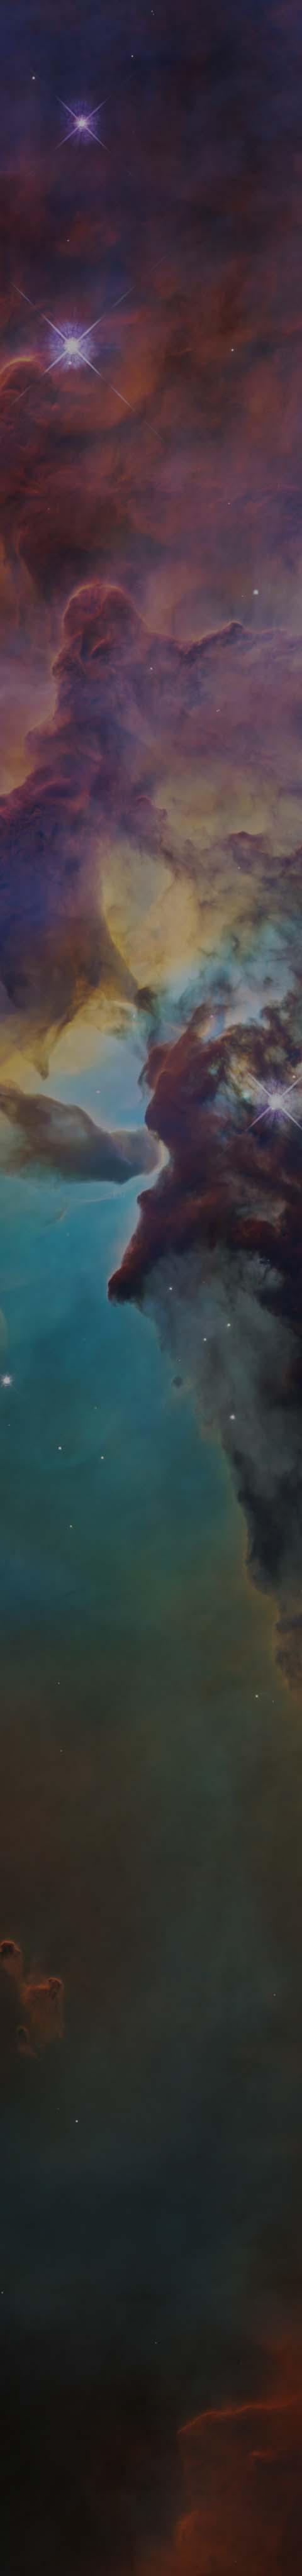 lagoon nebula